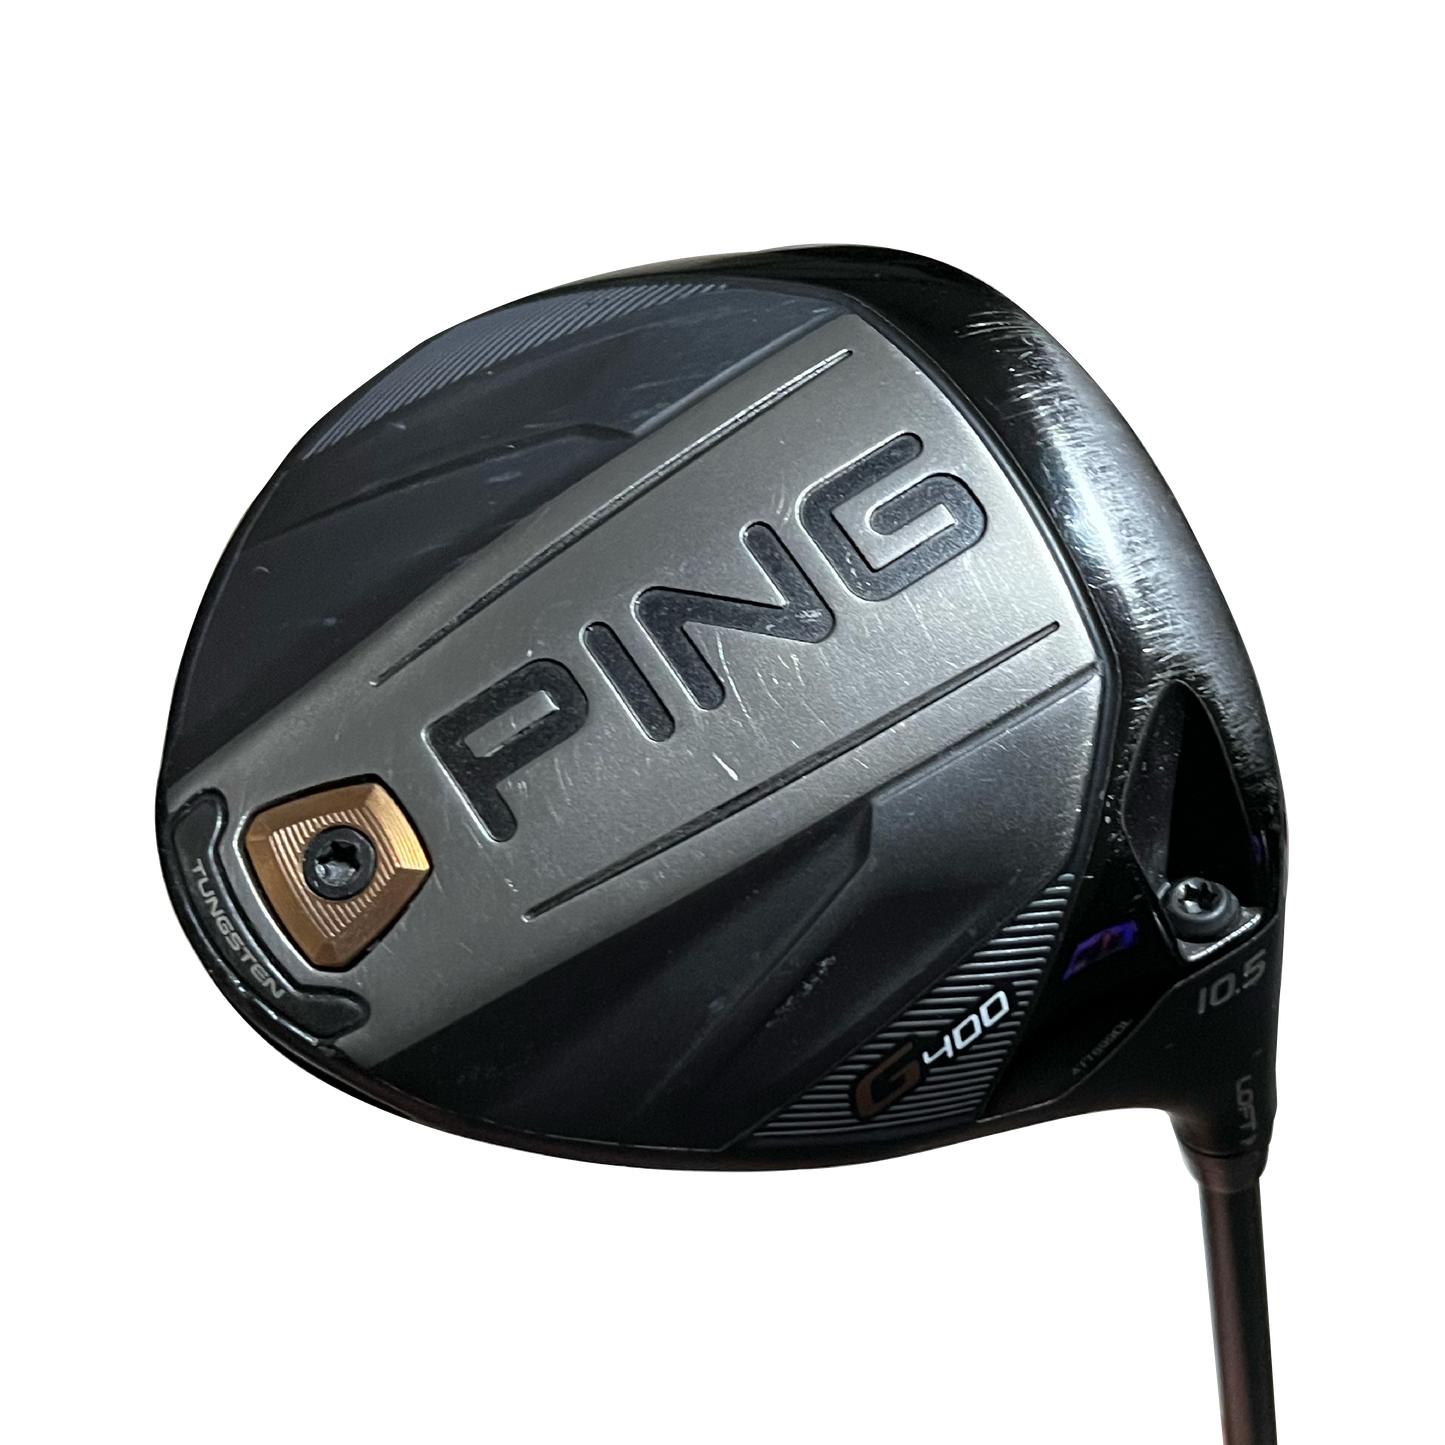 Ping - G400 - 10.5° Stiff